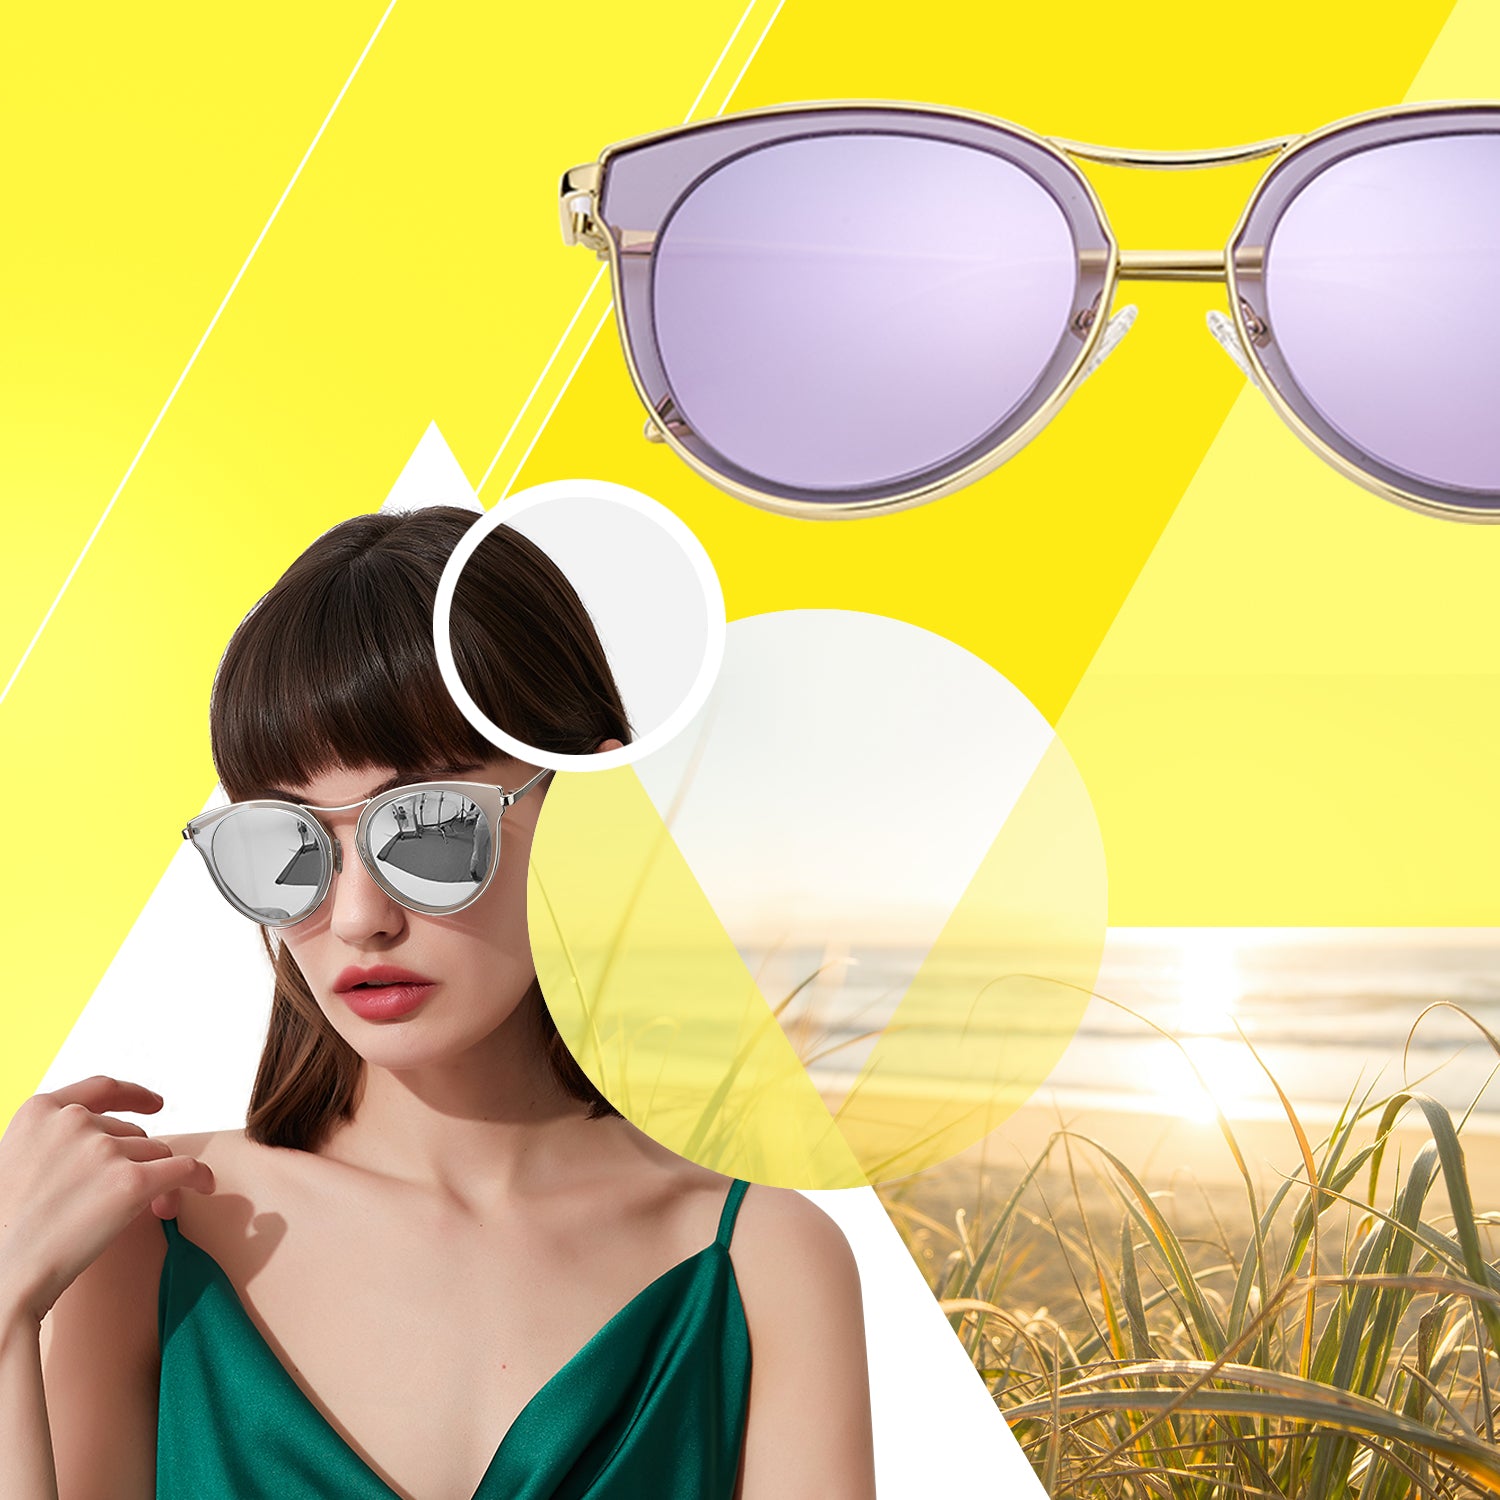 LVIOE Women's Cat Eye Polarized Sunglasses with UV400 Protection